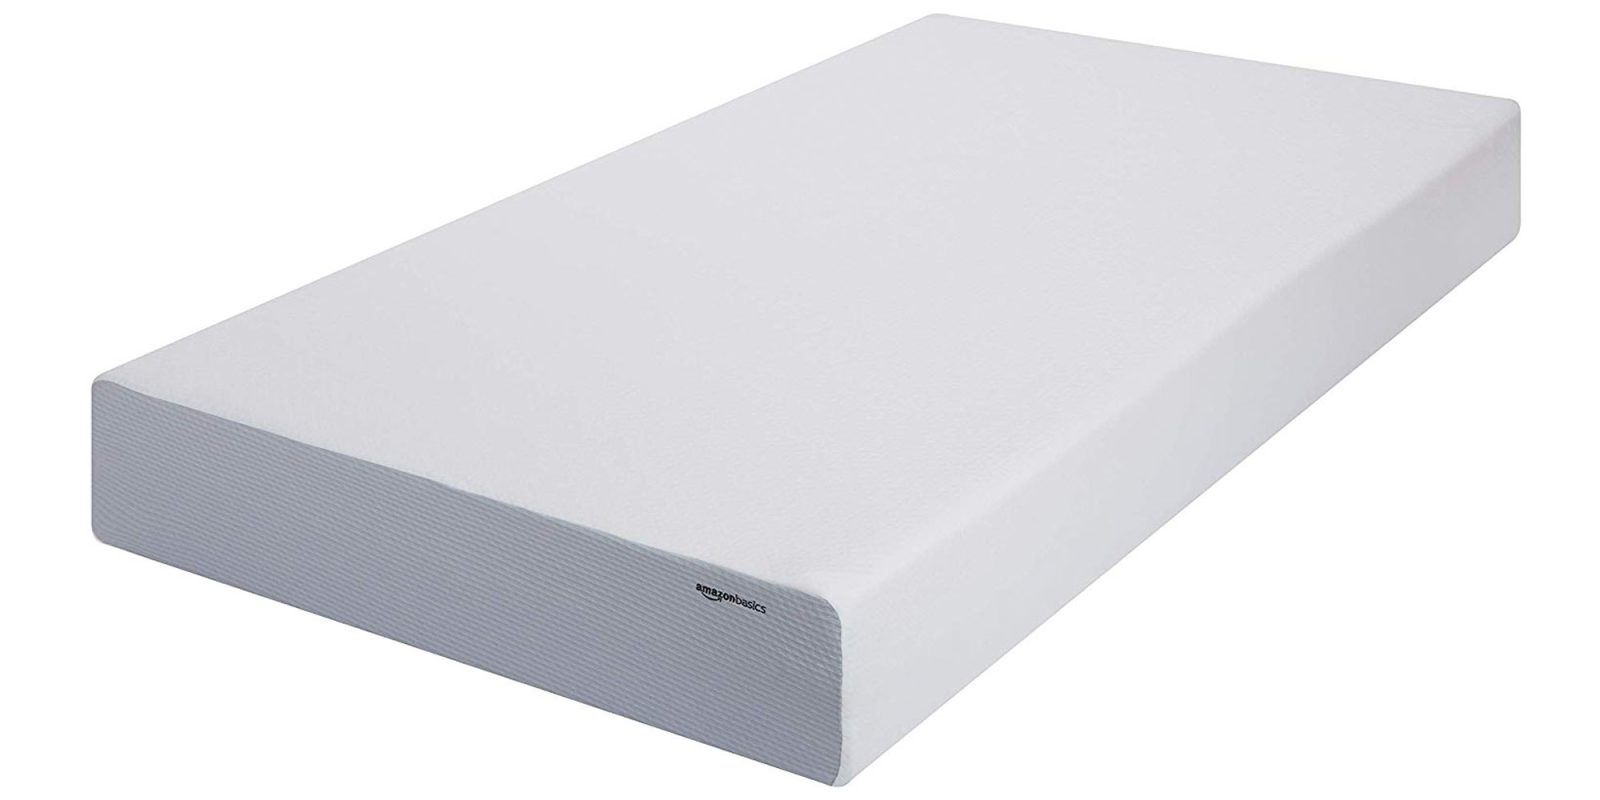 10 plush memory foam mattress amazon independent sleep